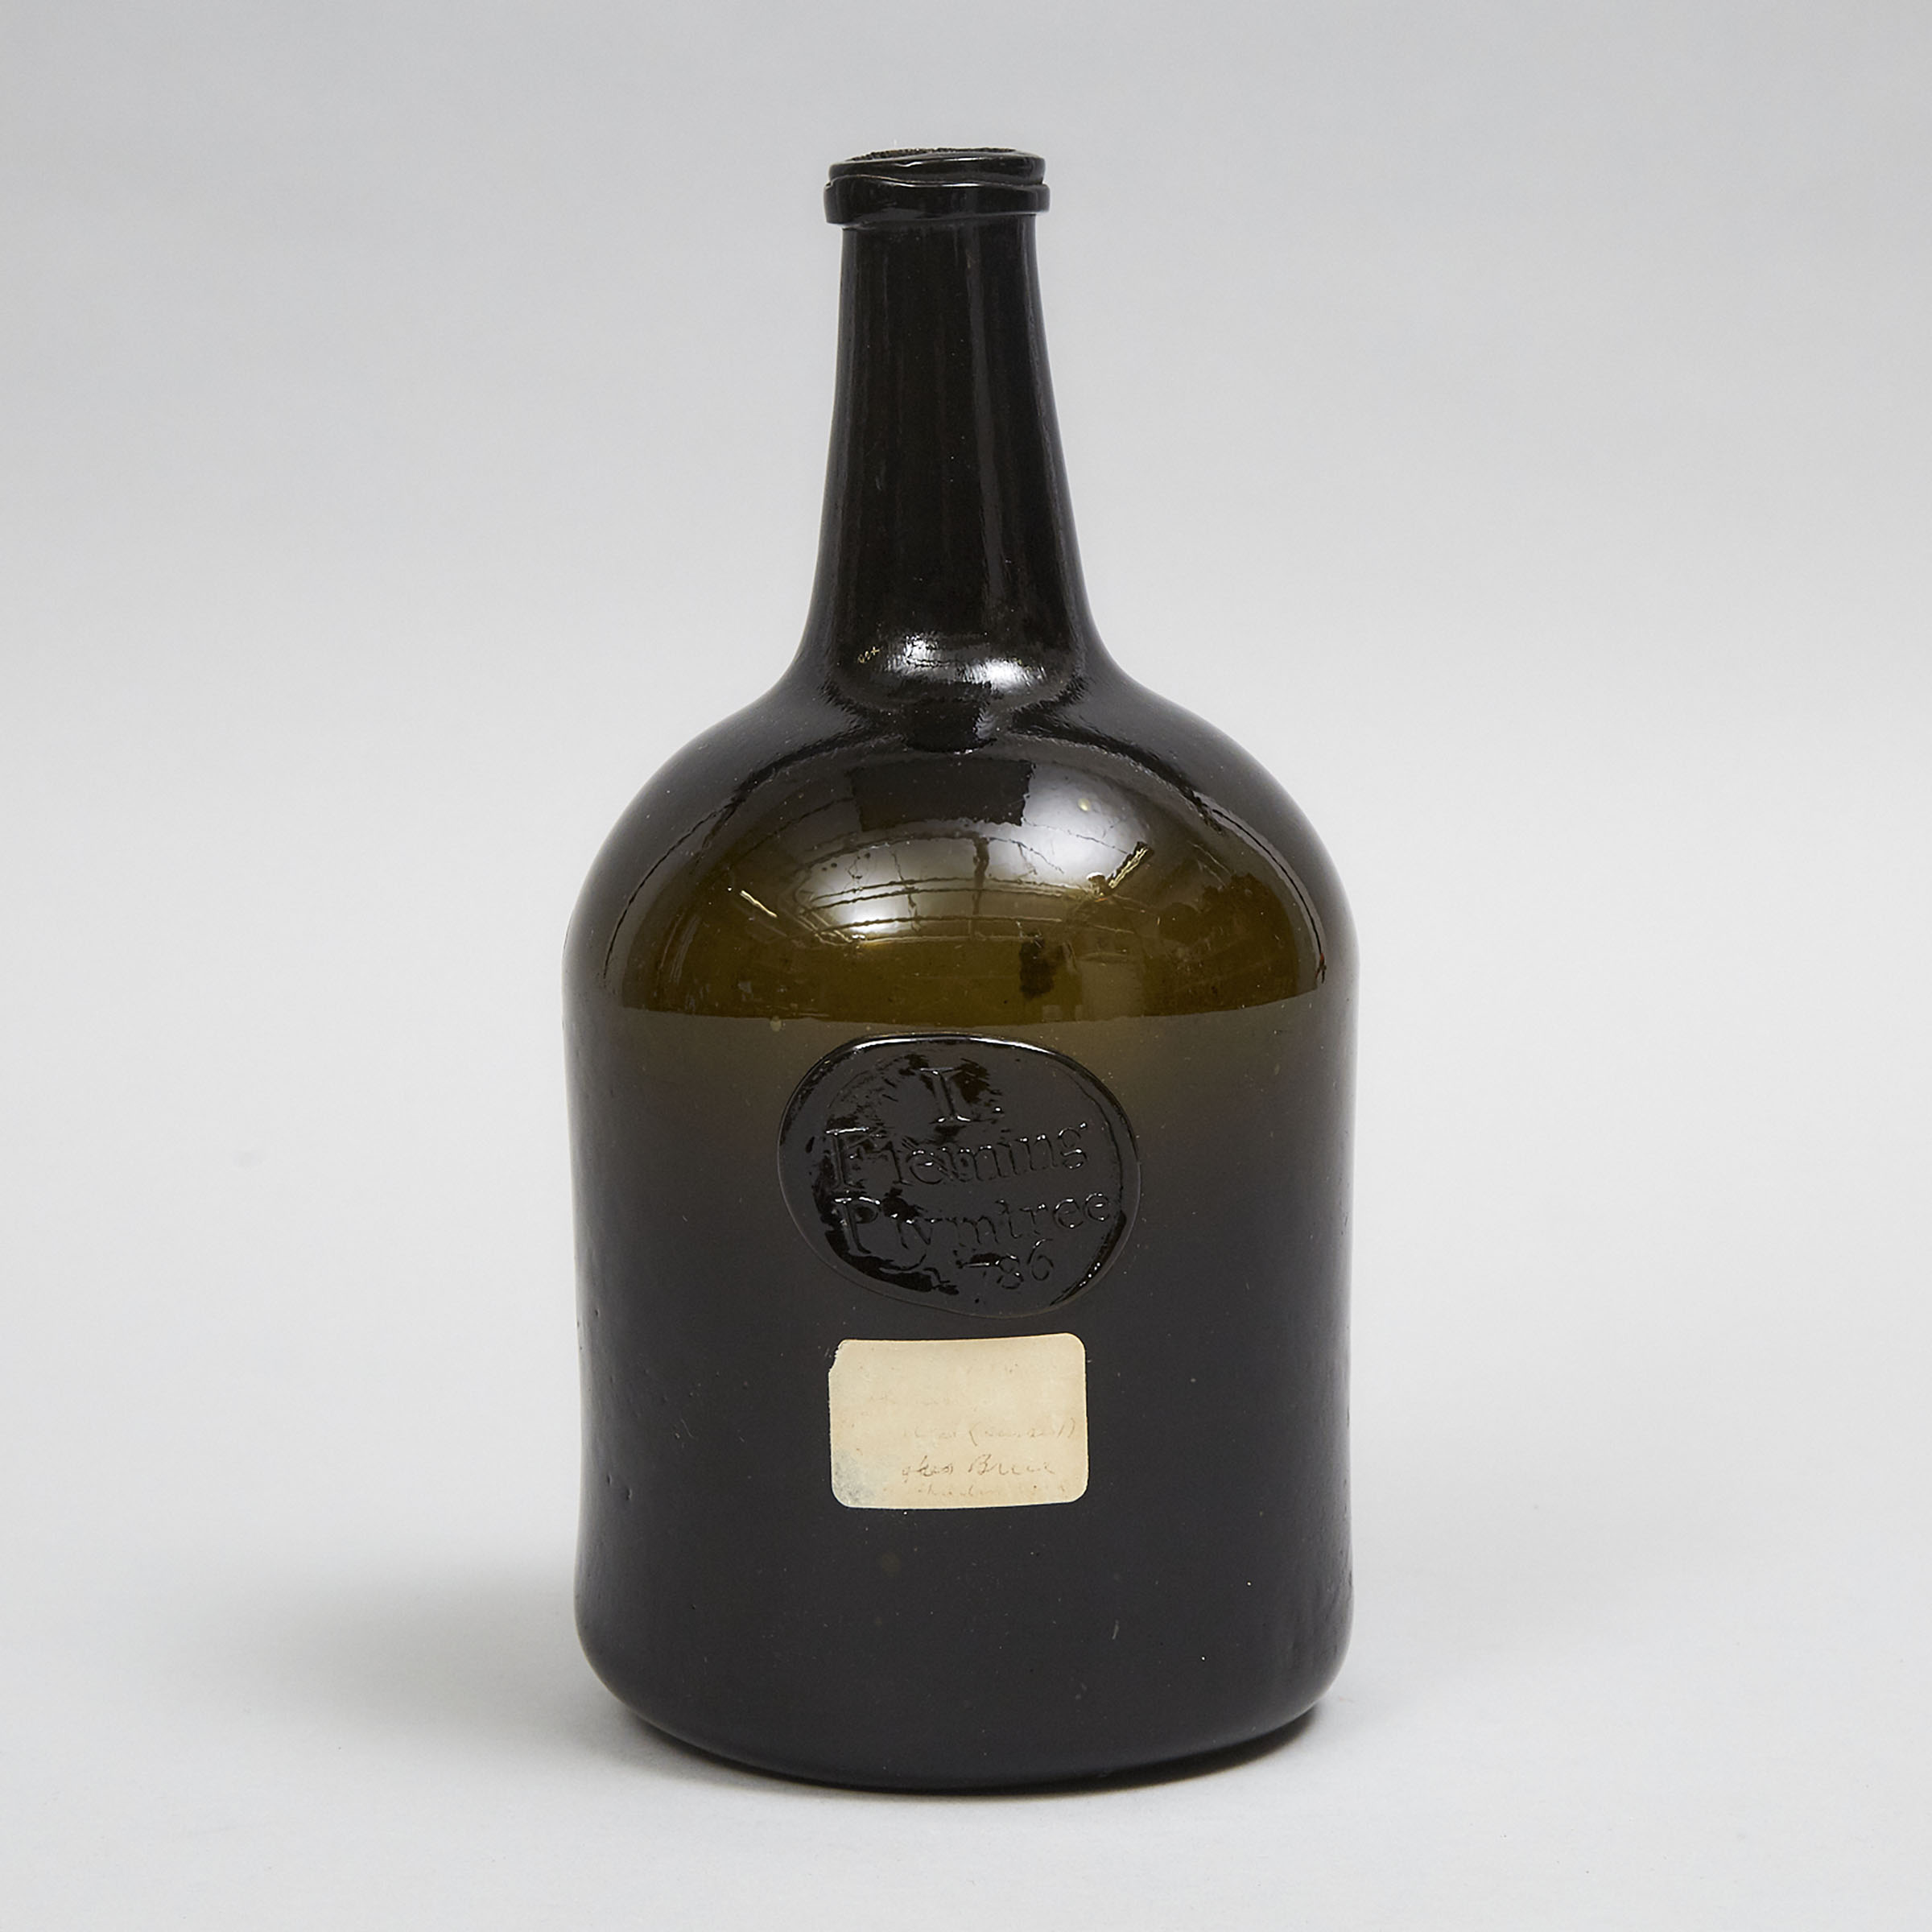 English Green Glass Applied Seal Wine Bottle, I: Fleming, Plymtree, 1786